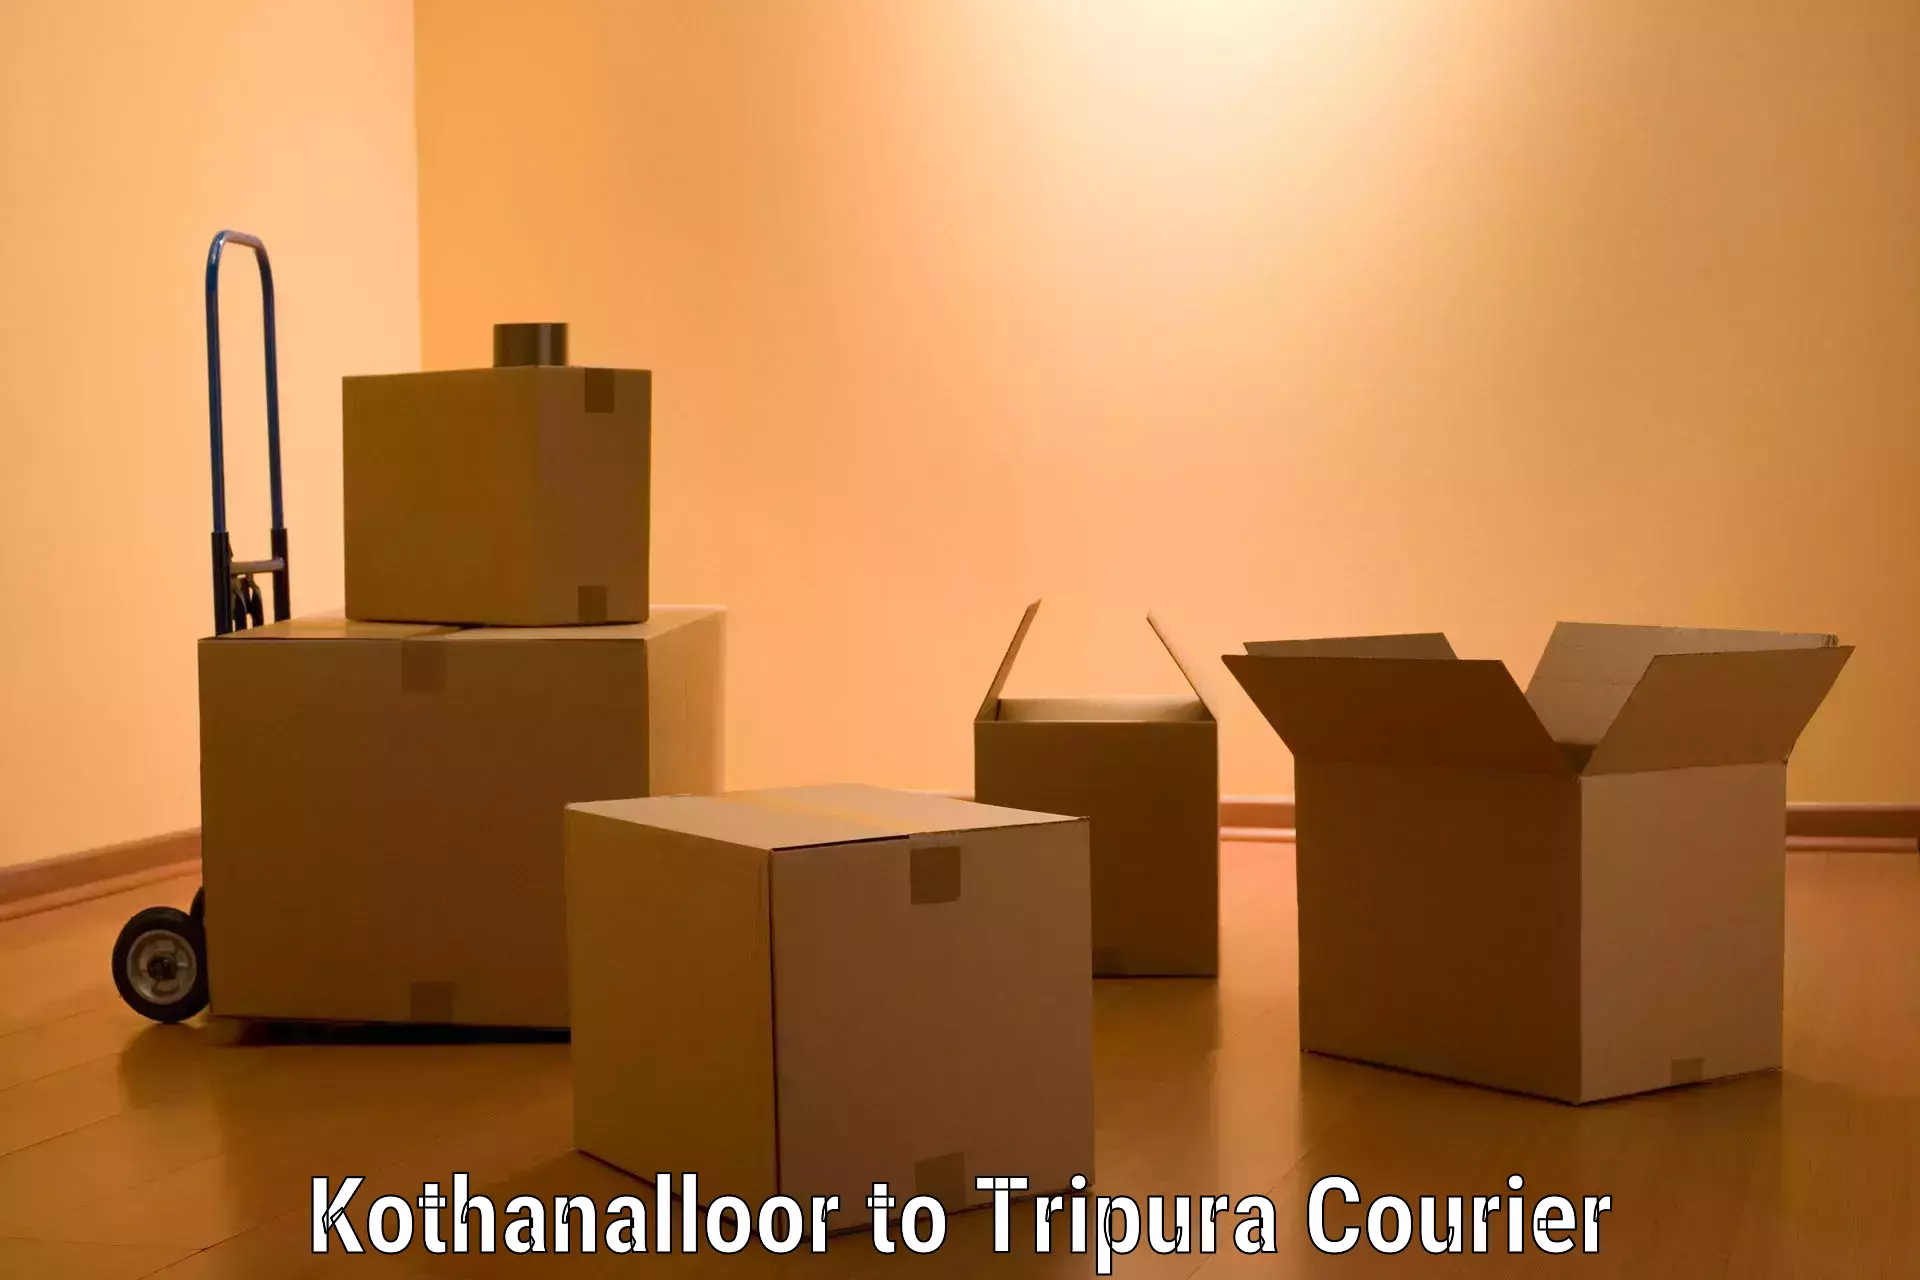 Trusted moving company Kothanalloor to Udaipur Tripura